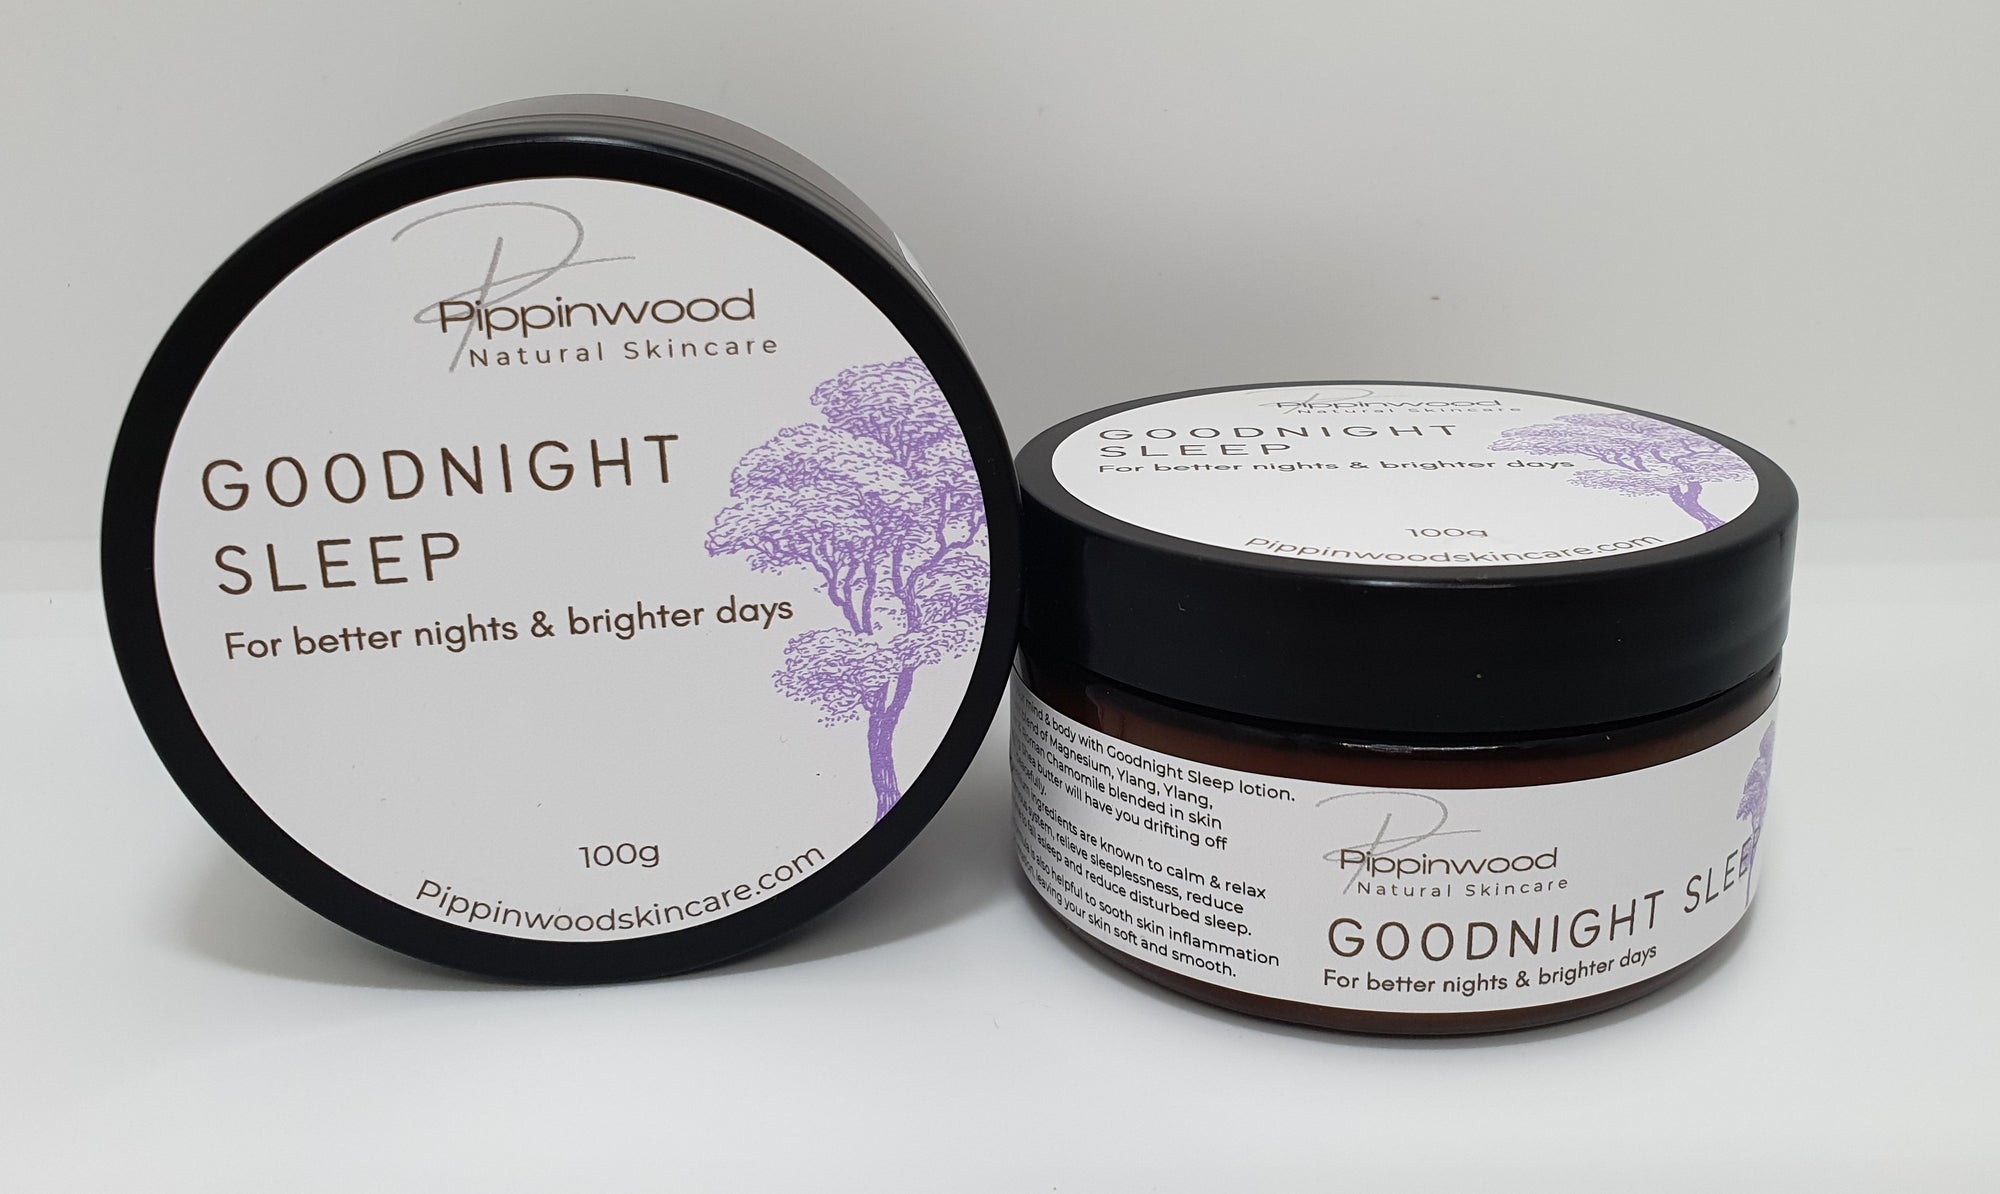 Pippinwood Natural Skincare Goodnight Sleep